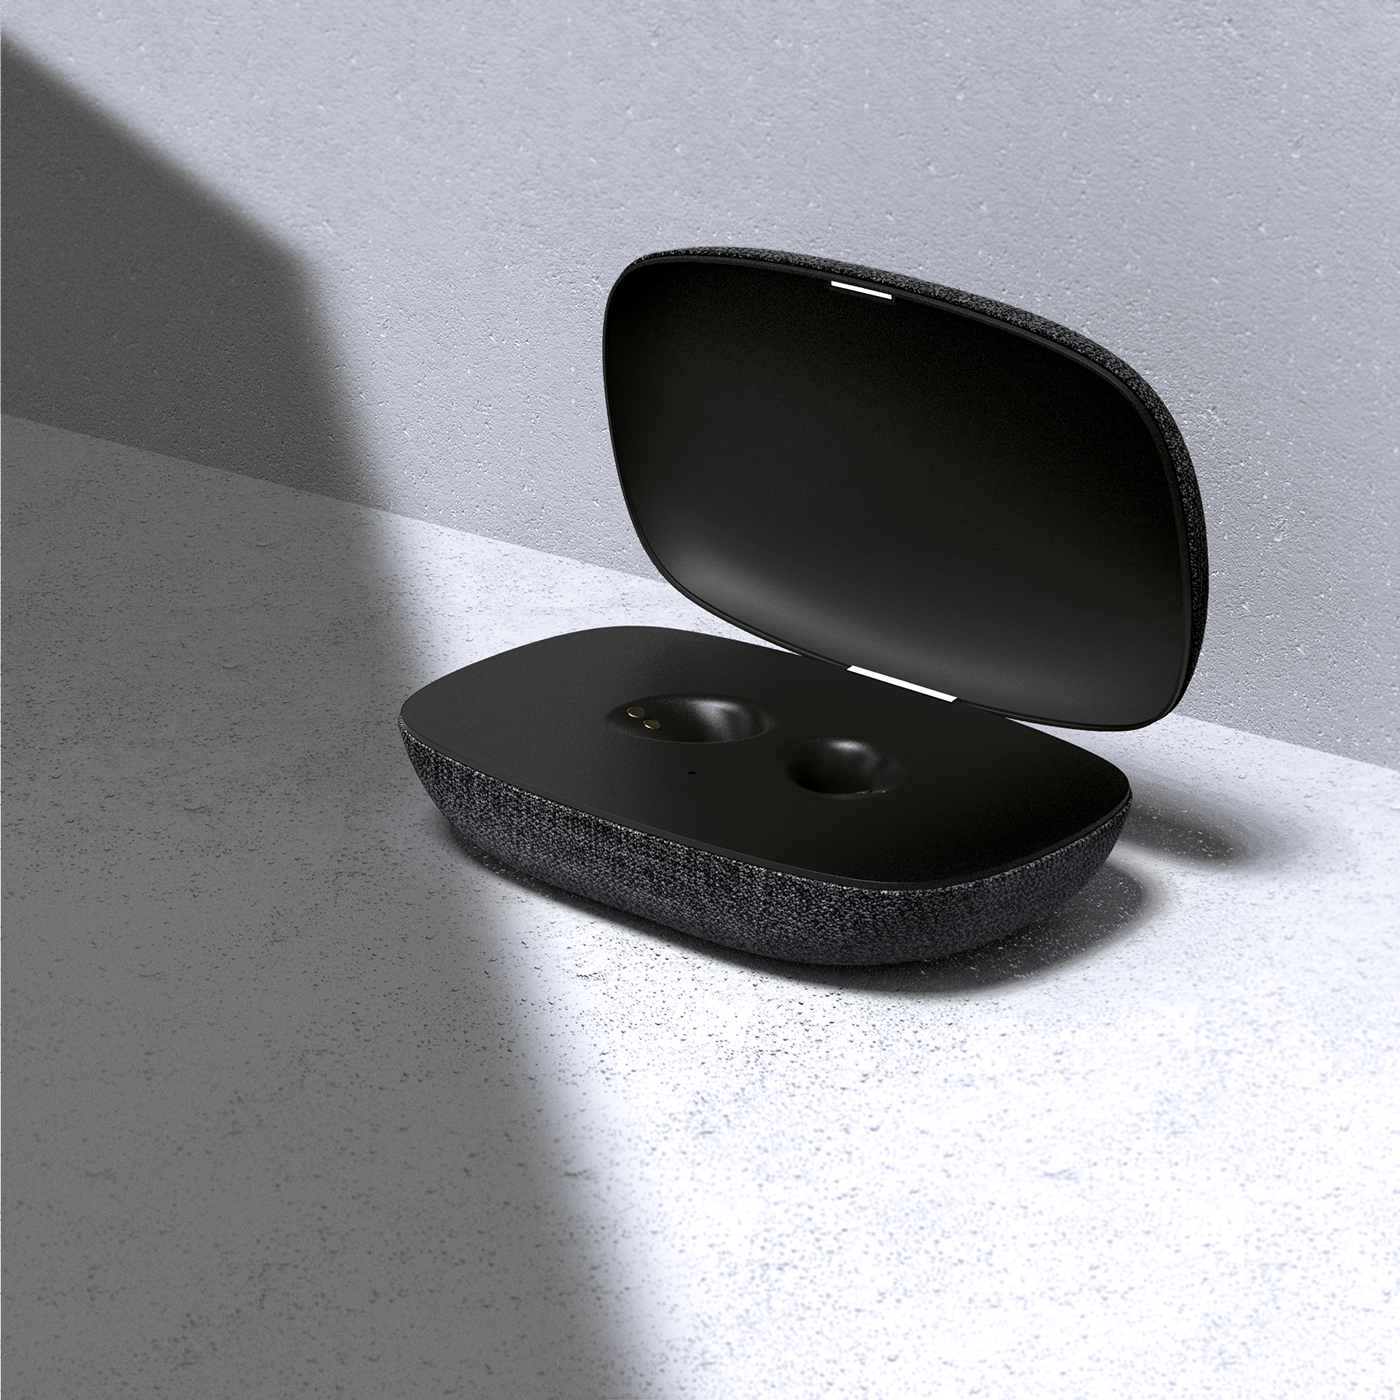 sennheiser future office hearables headphones speaker textile Audio workplace product family